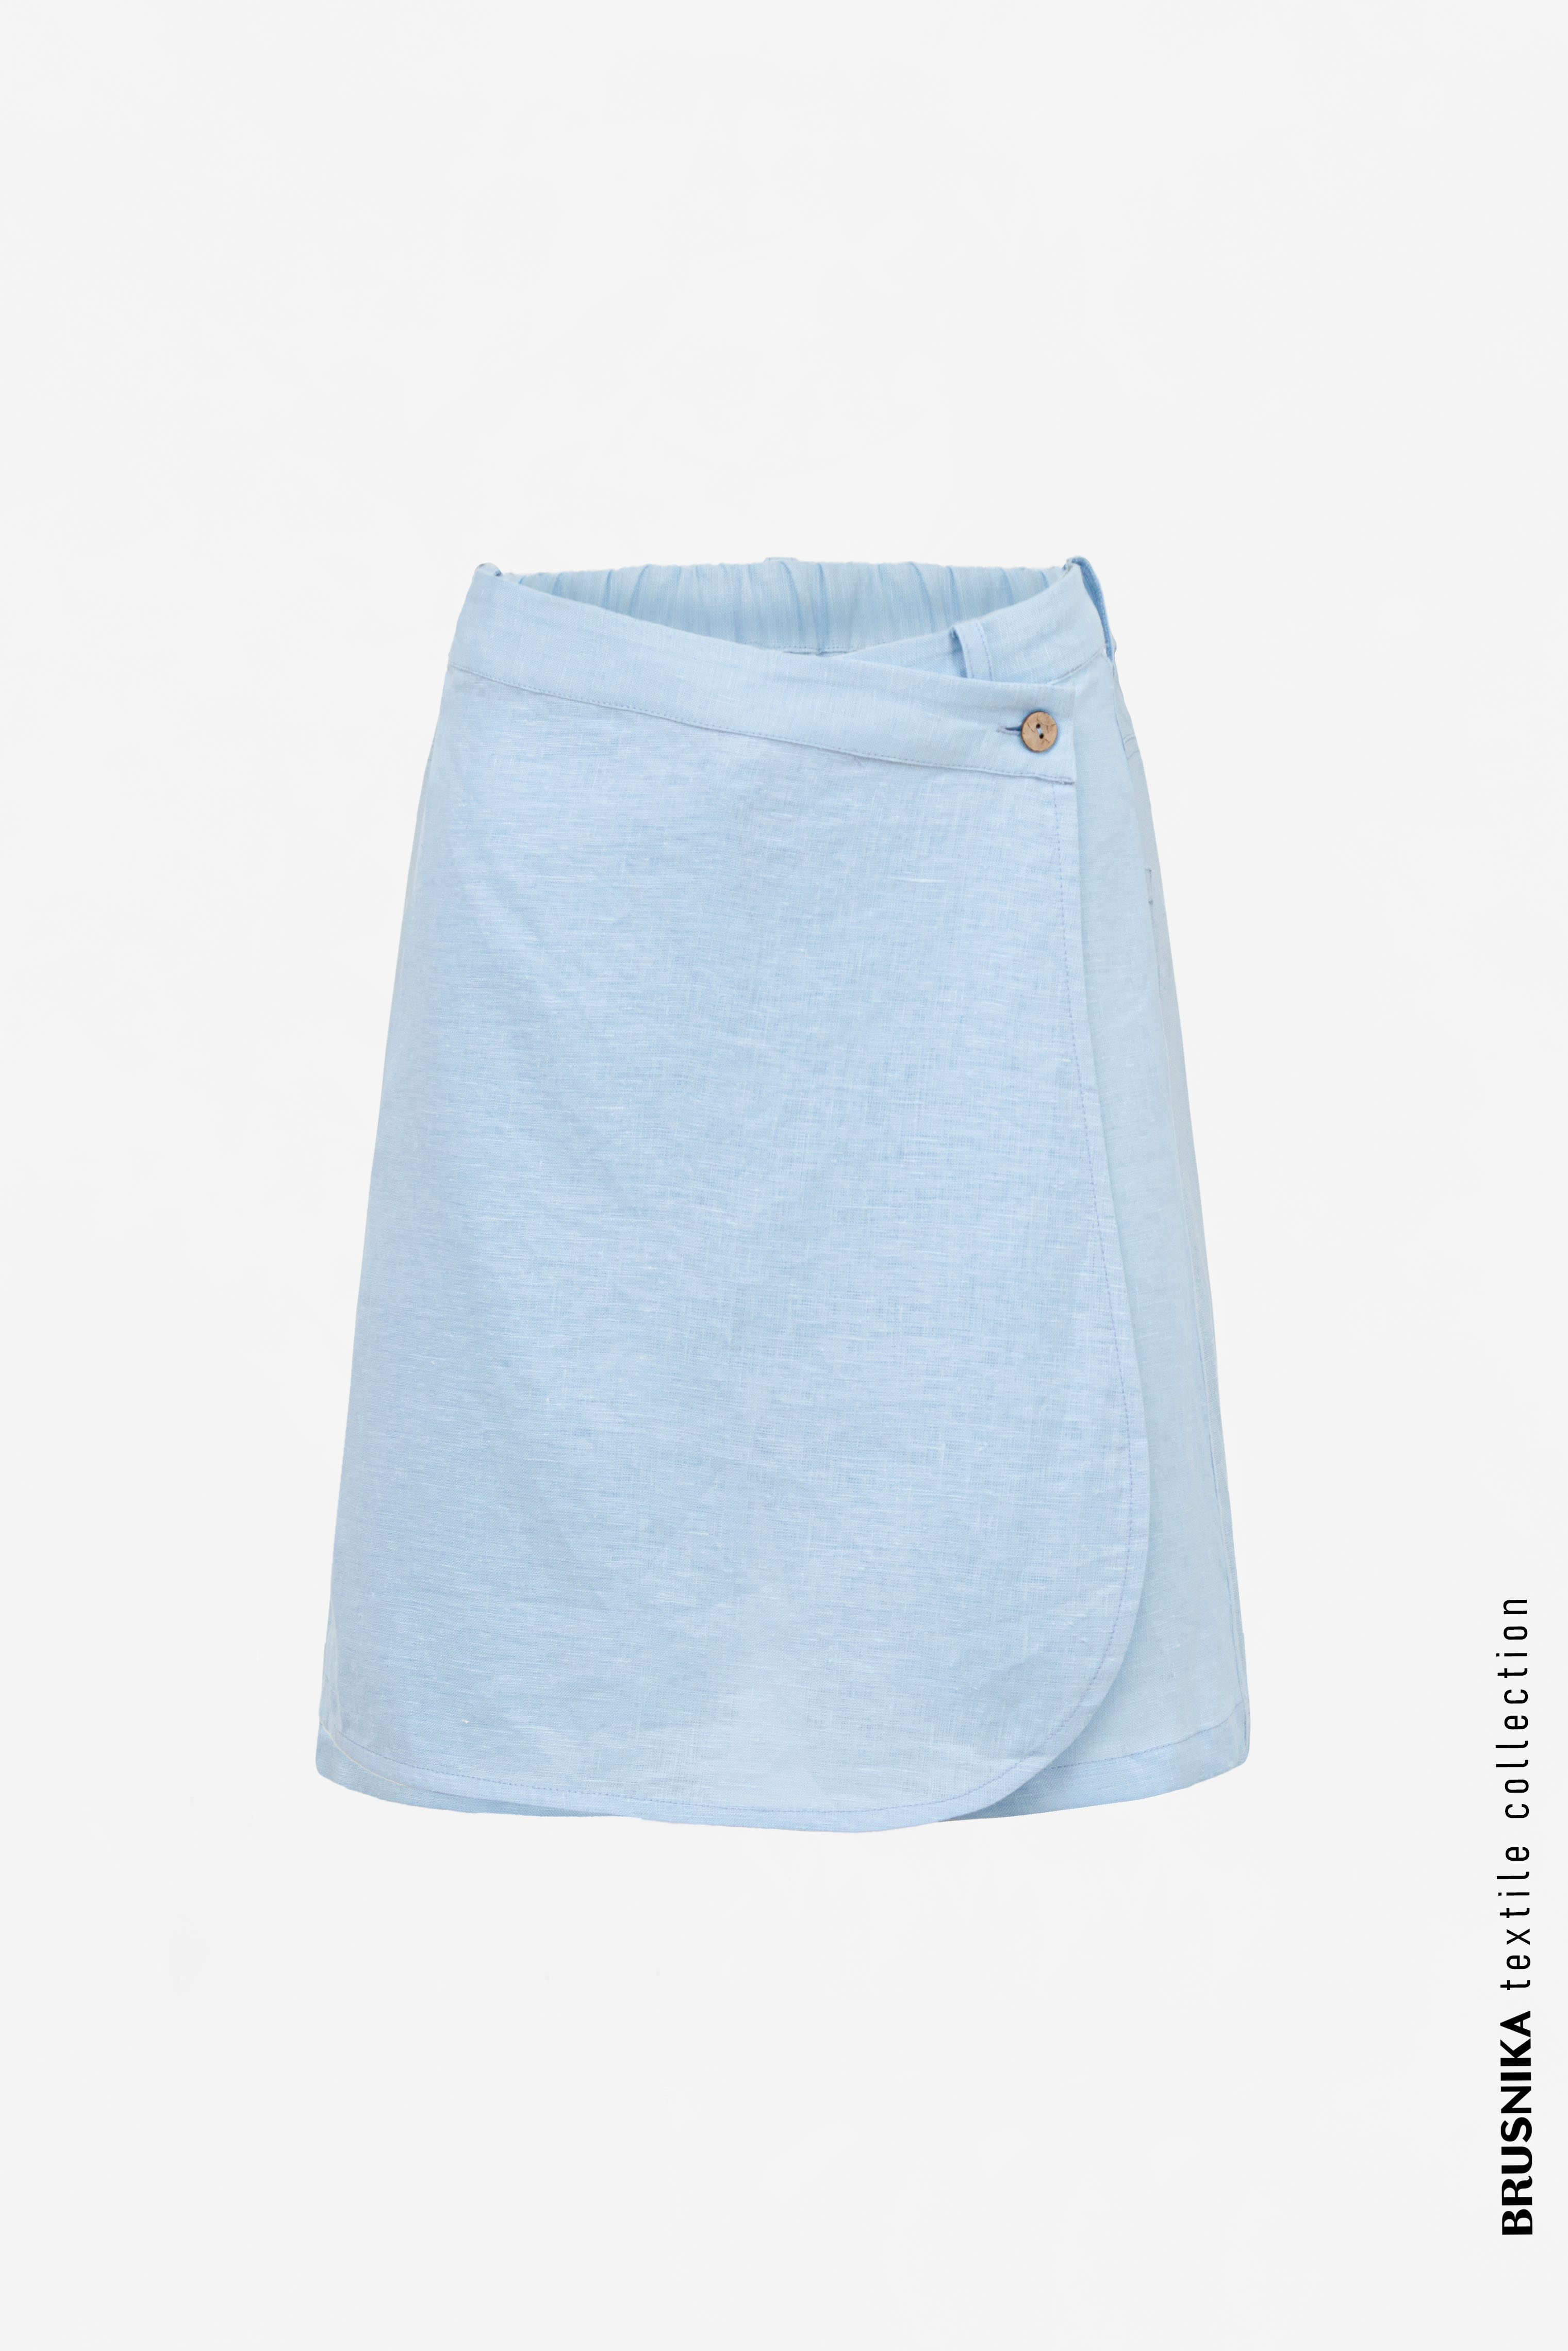 Skirt-shorts 4124-07 Blue from BRUSNiKA